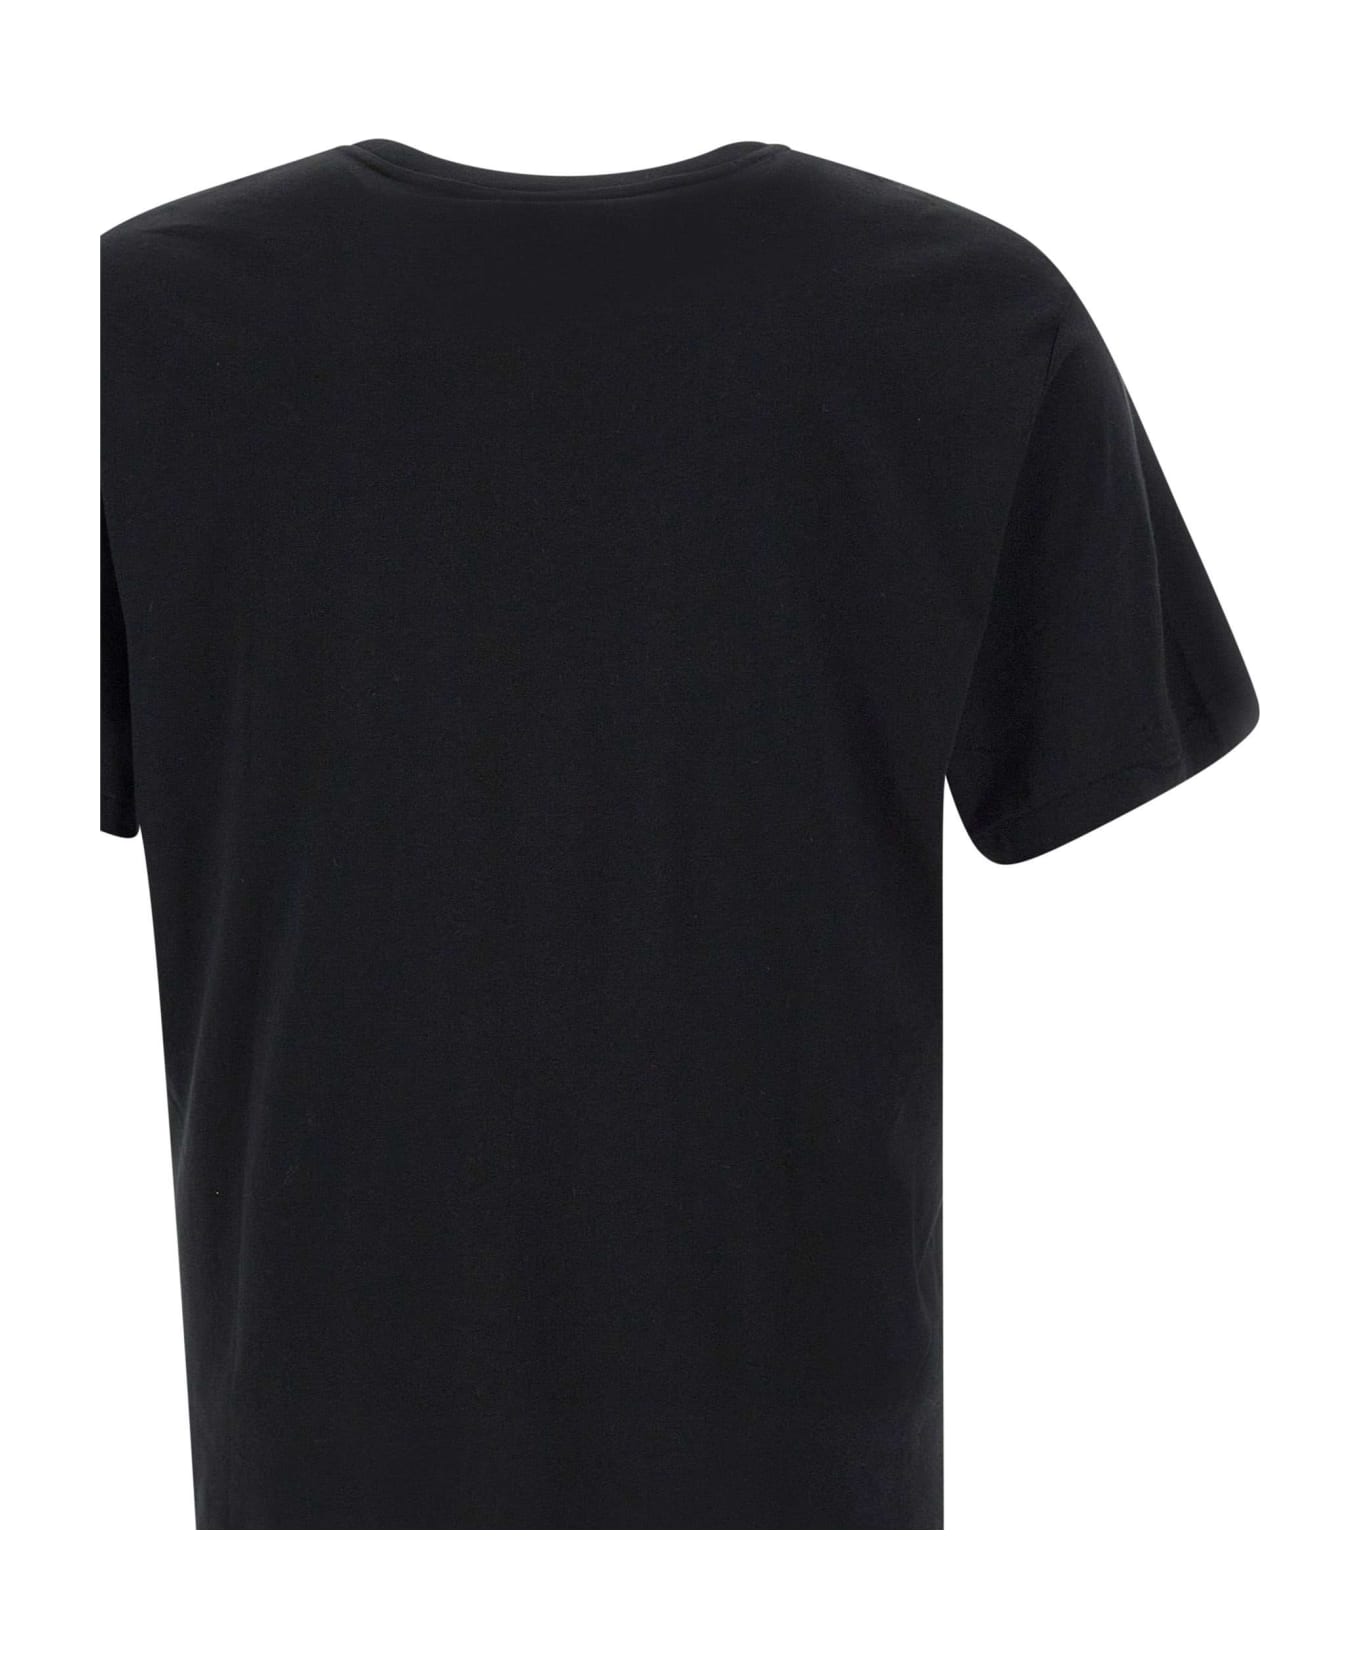 Polo Ralph Lauren 'msw' Cotton T-shirt - Polo black